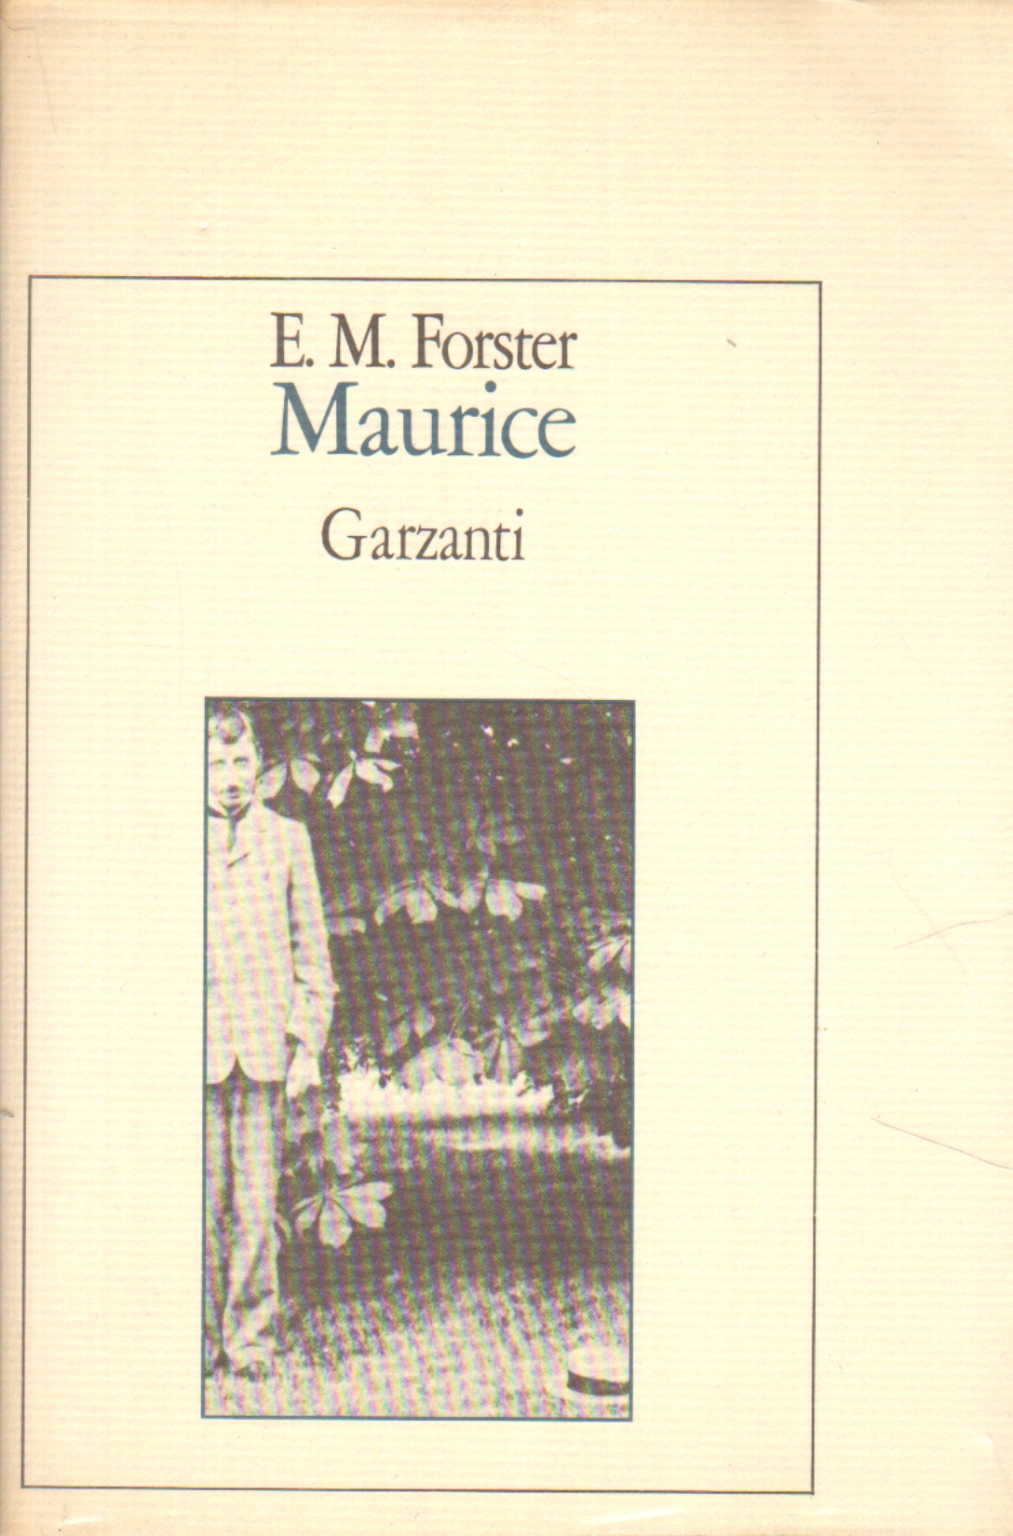 Maurice novel - Wikipedia